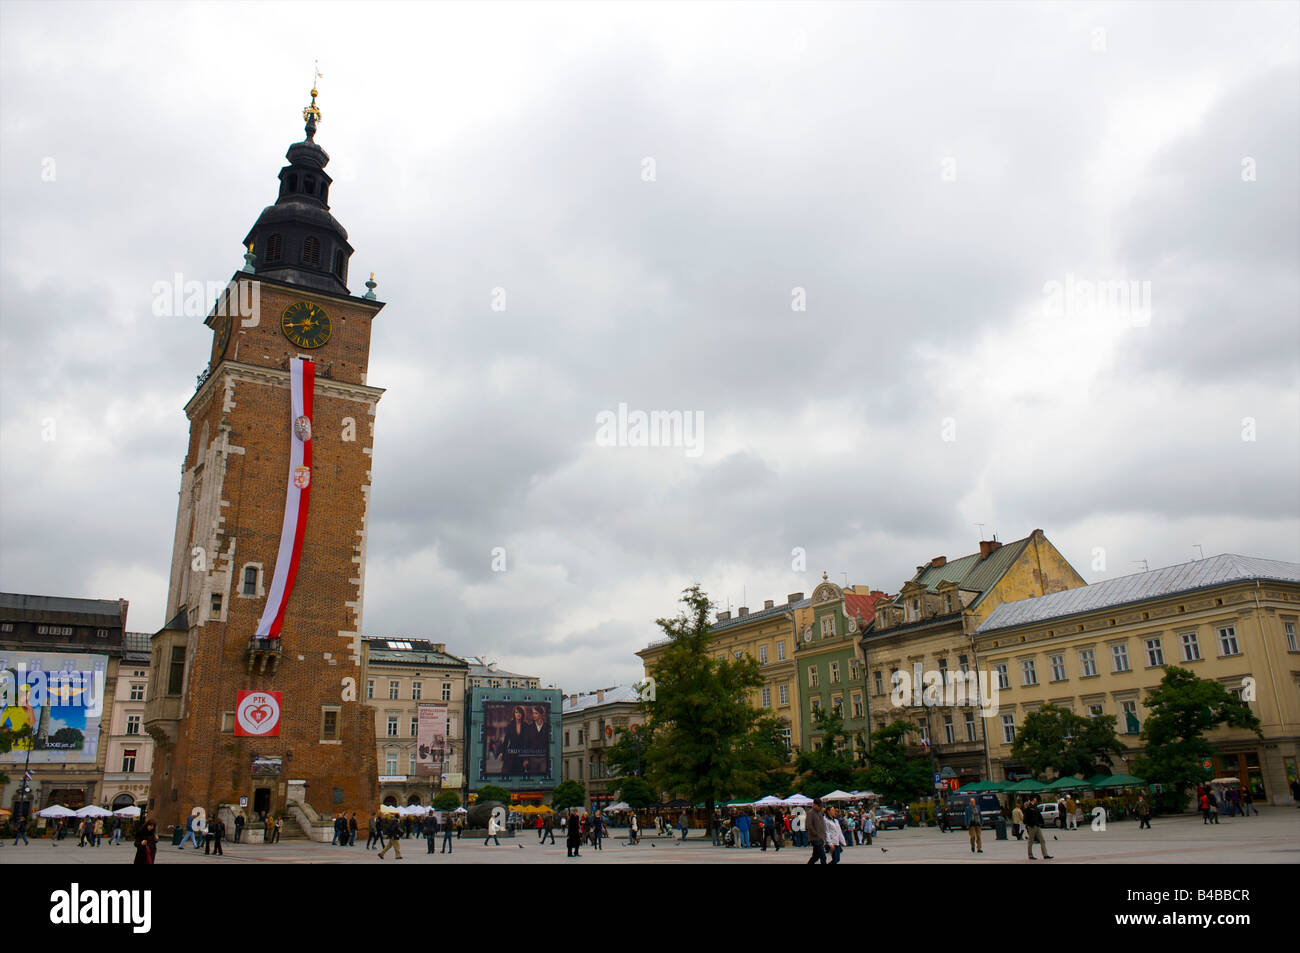 Group of people in a town square, Rynek Glowny, Krakow Historic Centre, Krakow, Lesser Poland Voivodeship, Poland Stock Photo